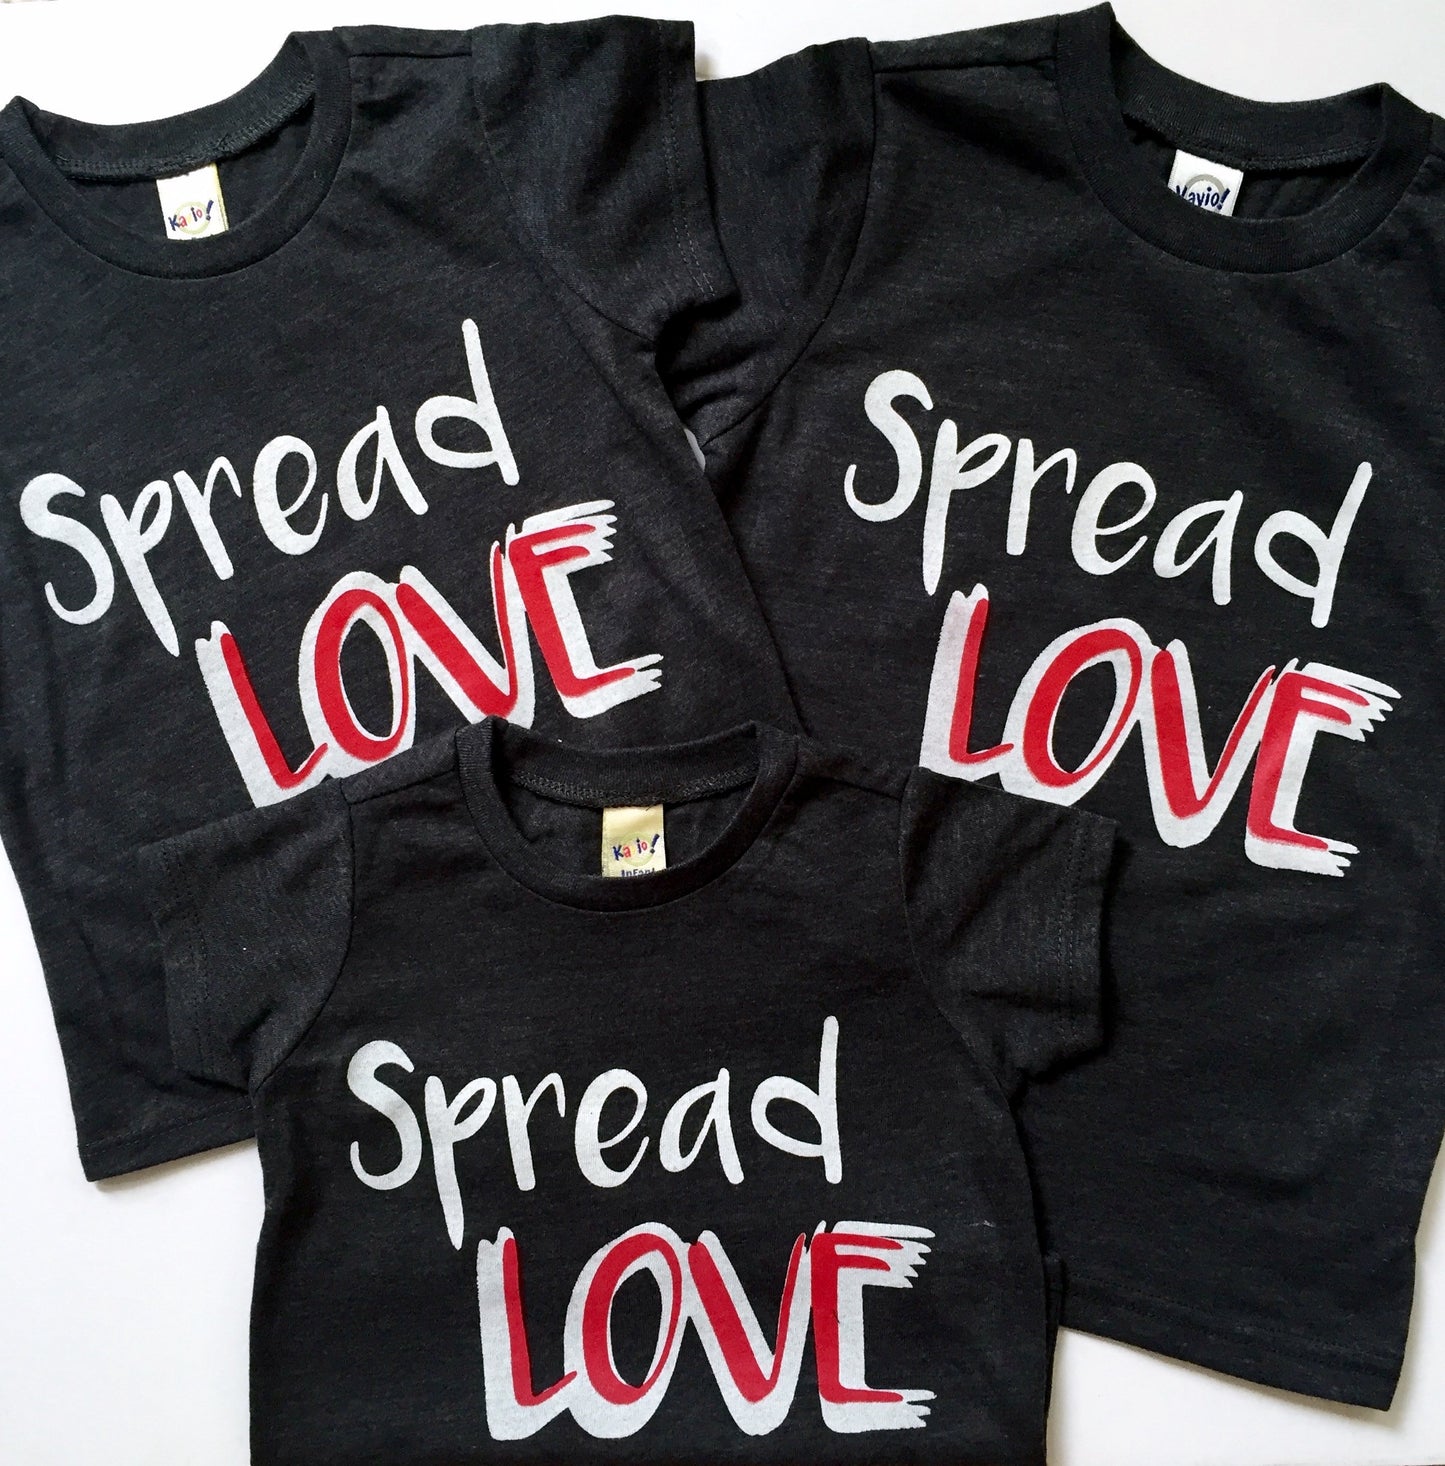 Spread LOVE tee